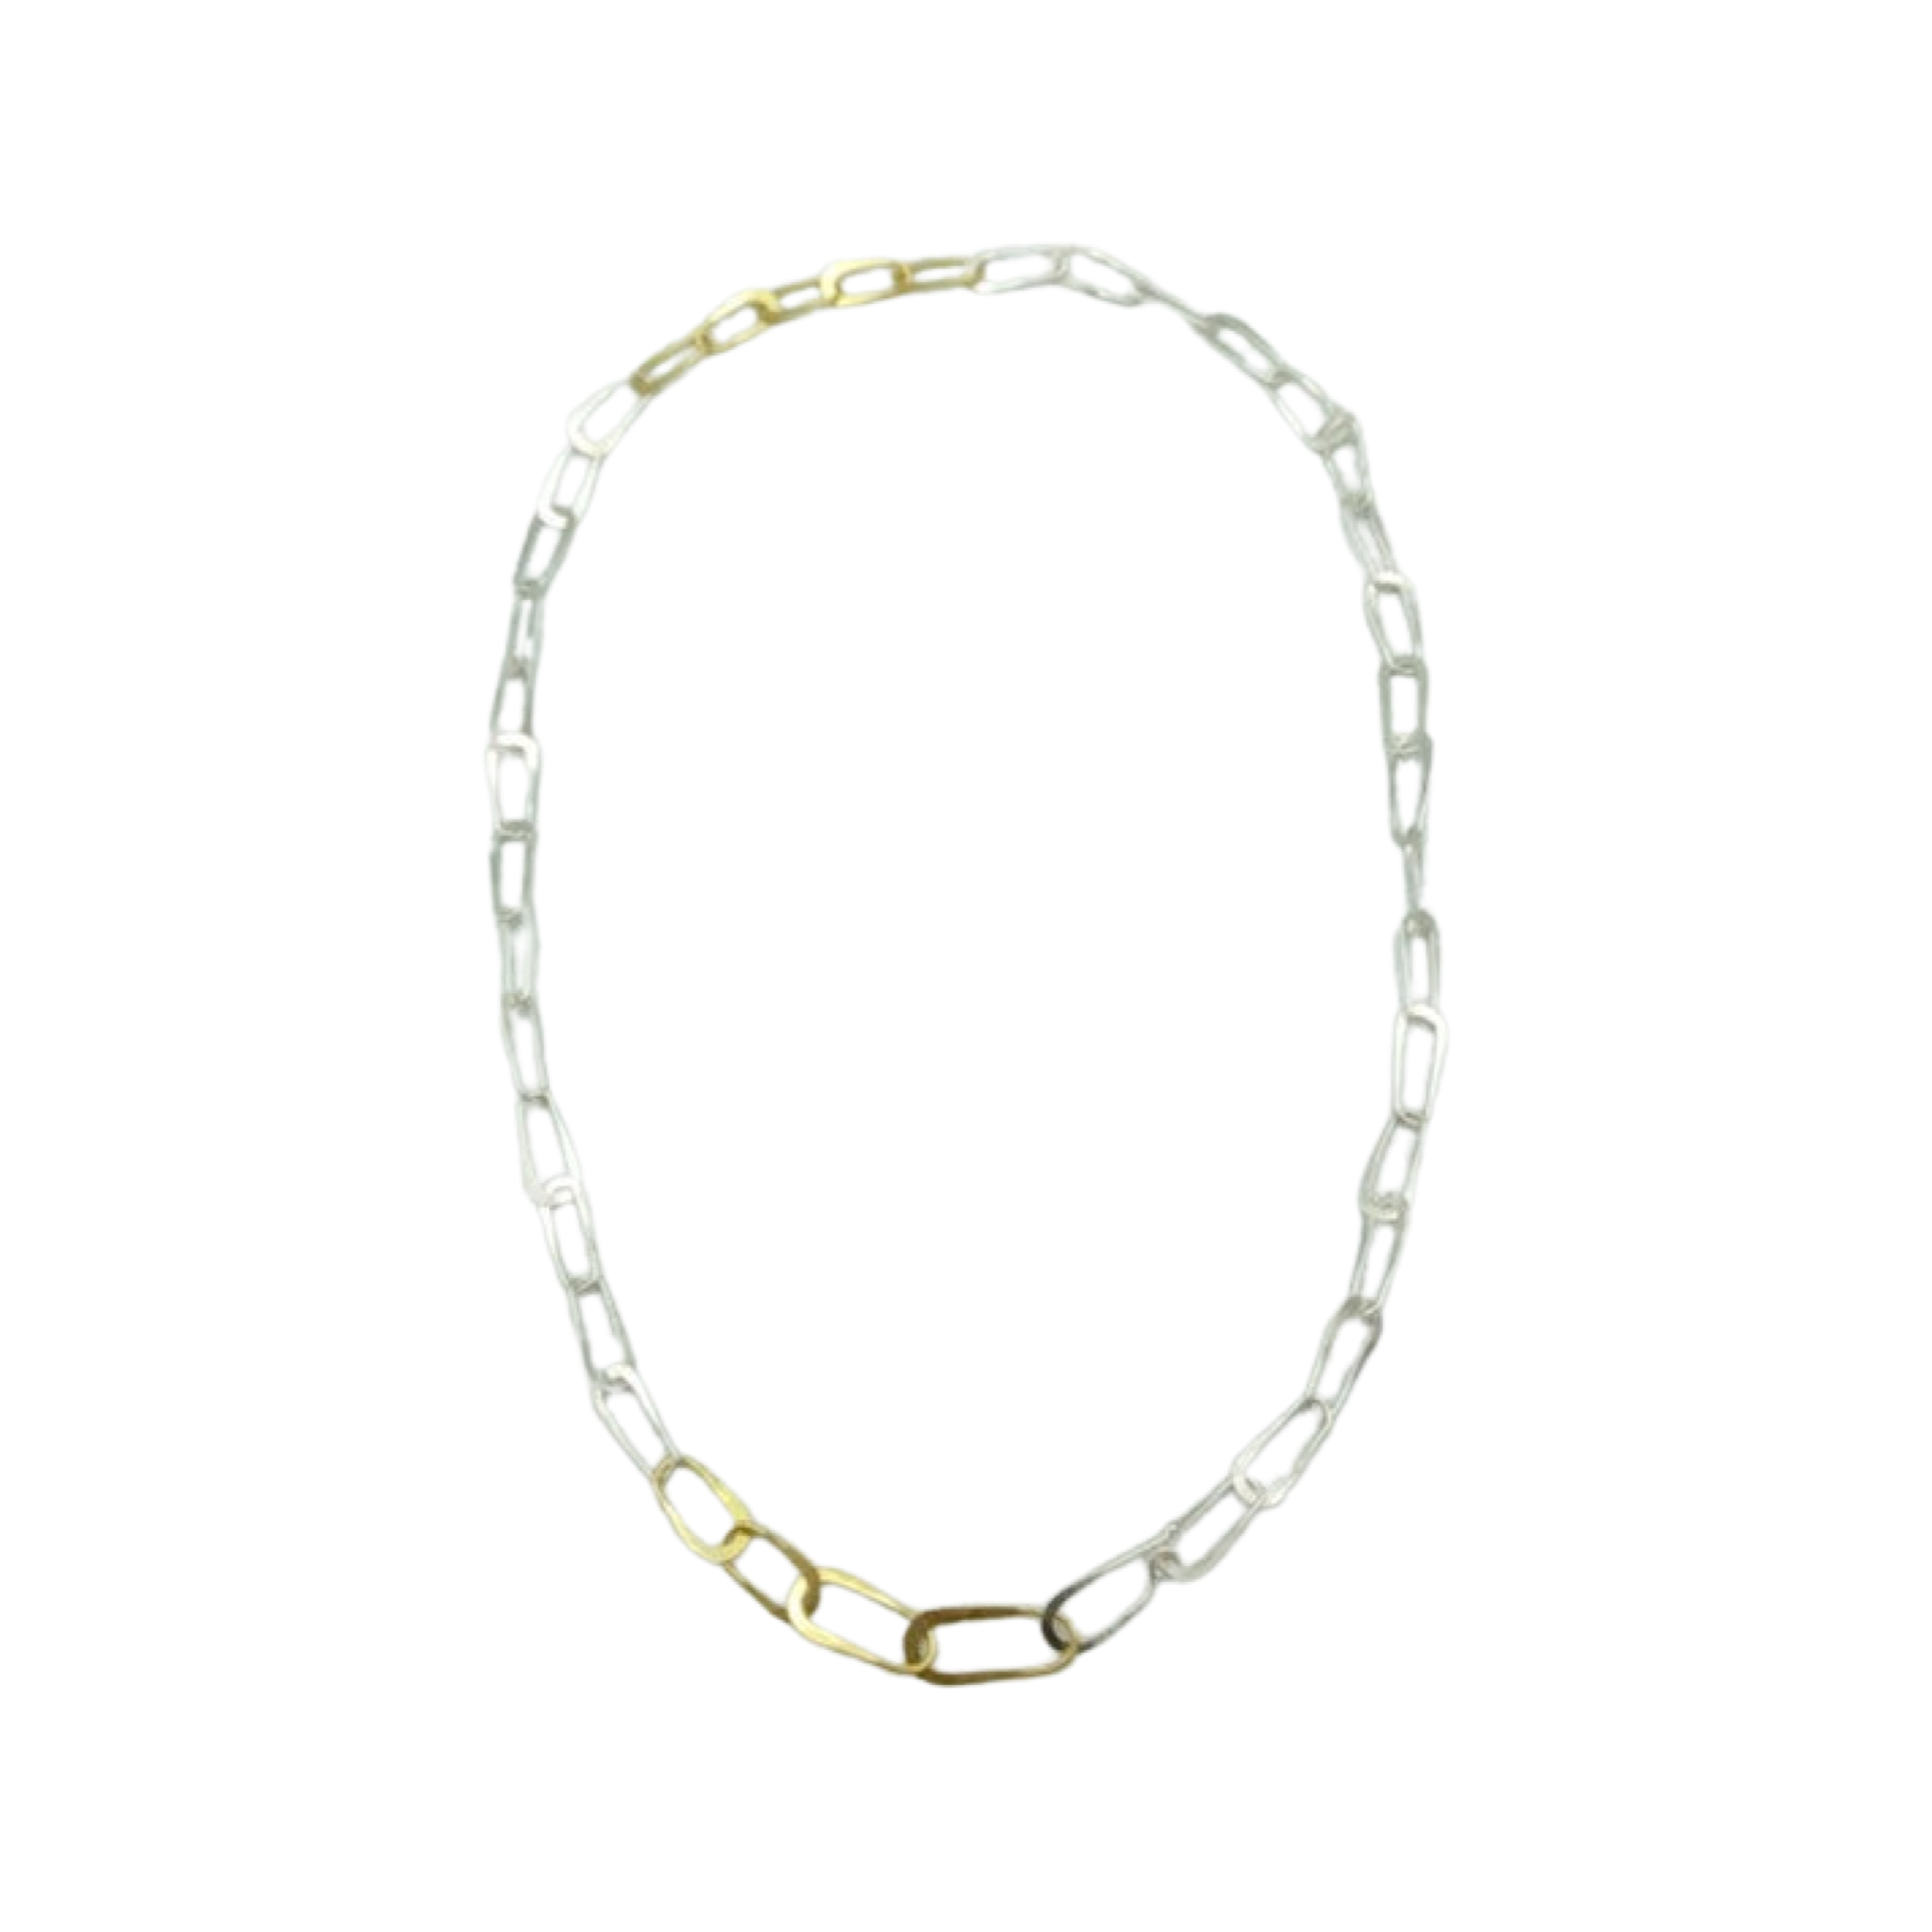 18K Gold Circle Link Necklace